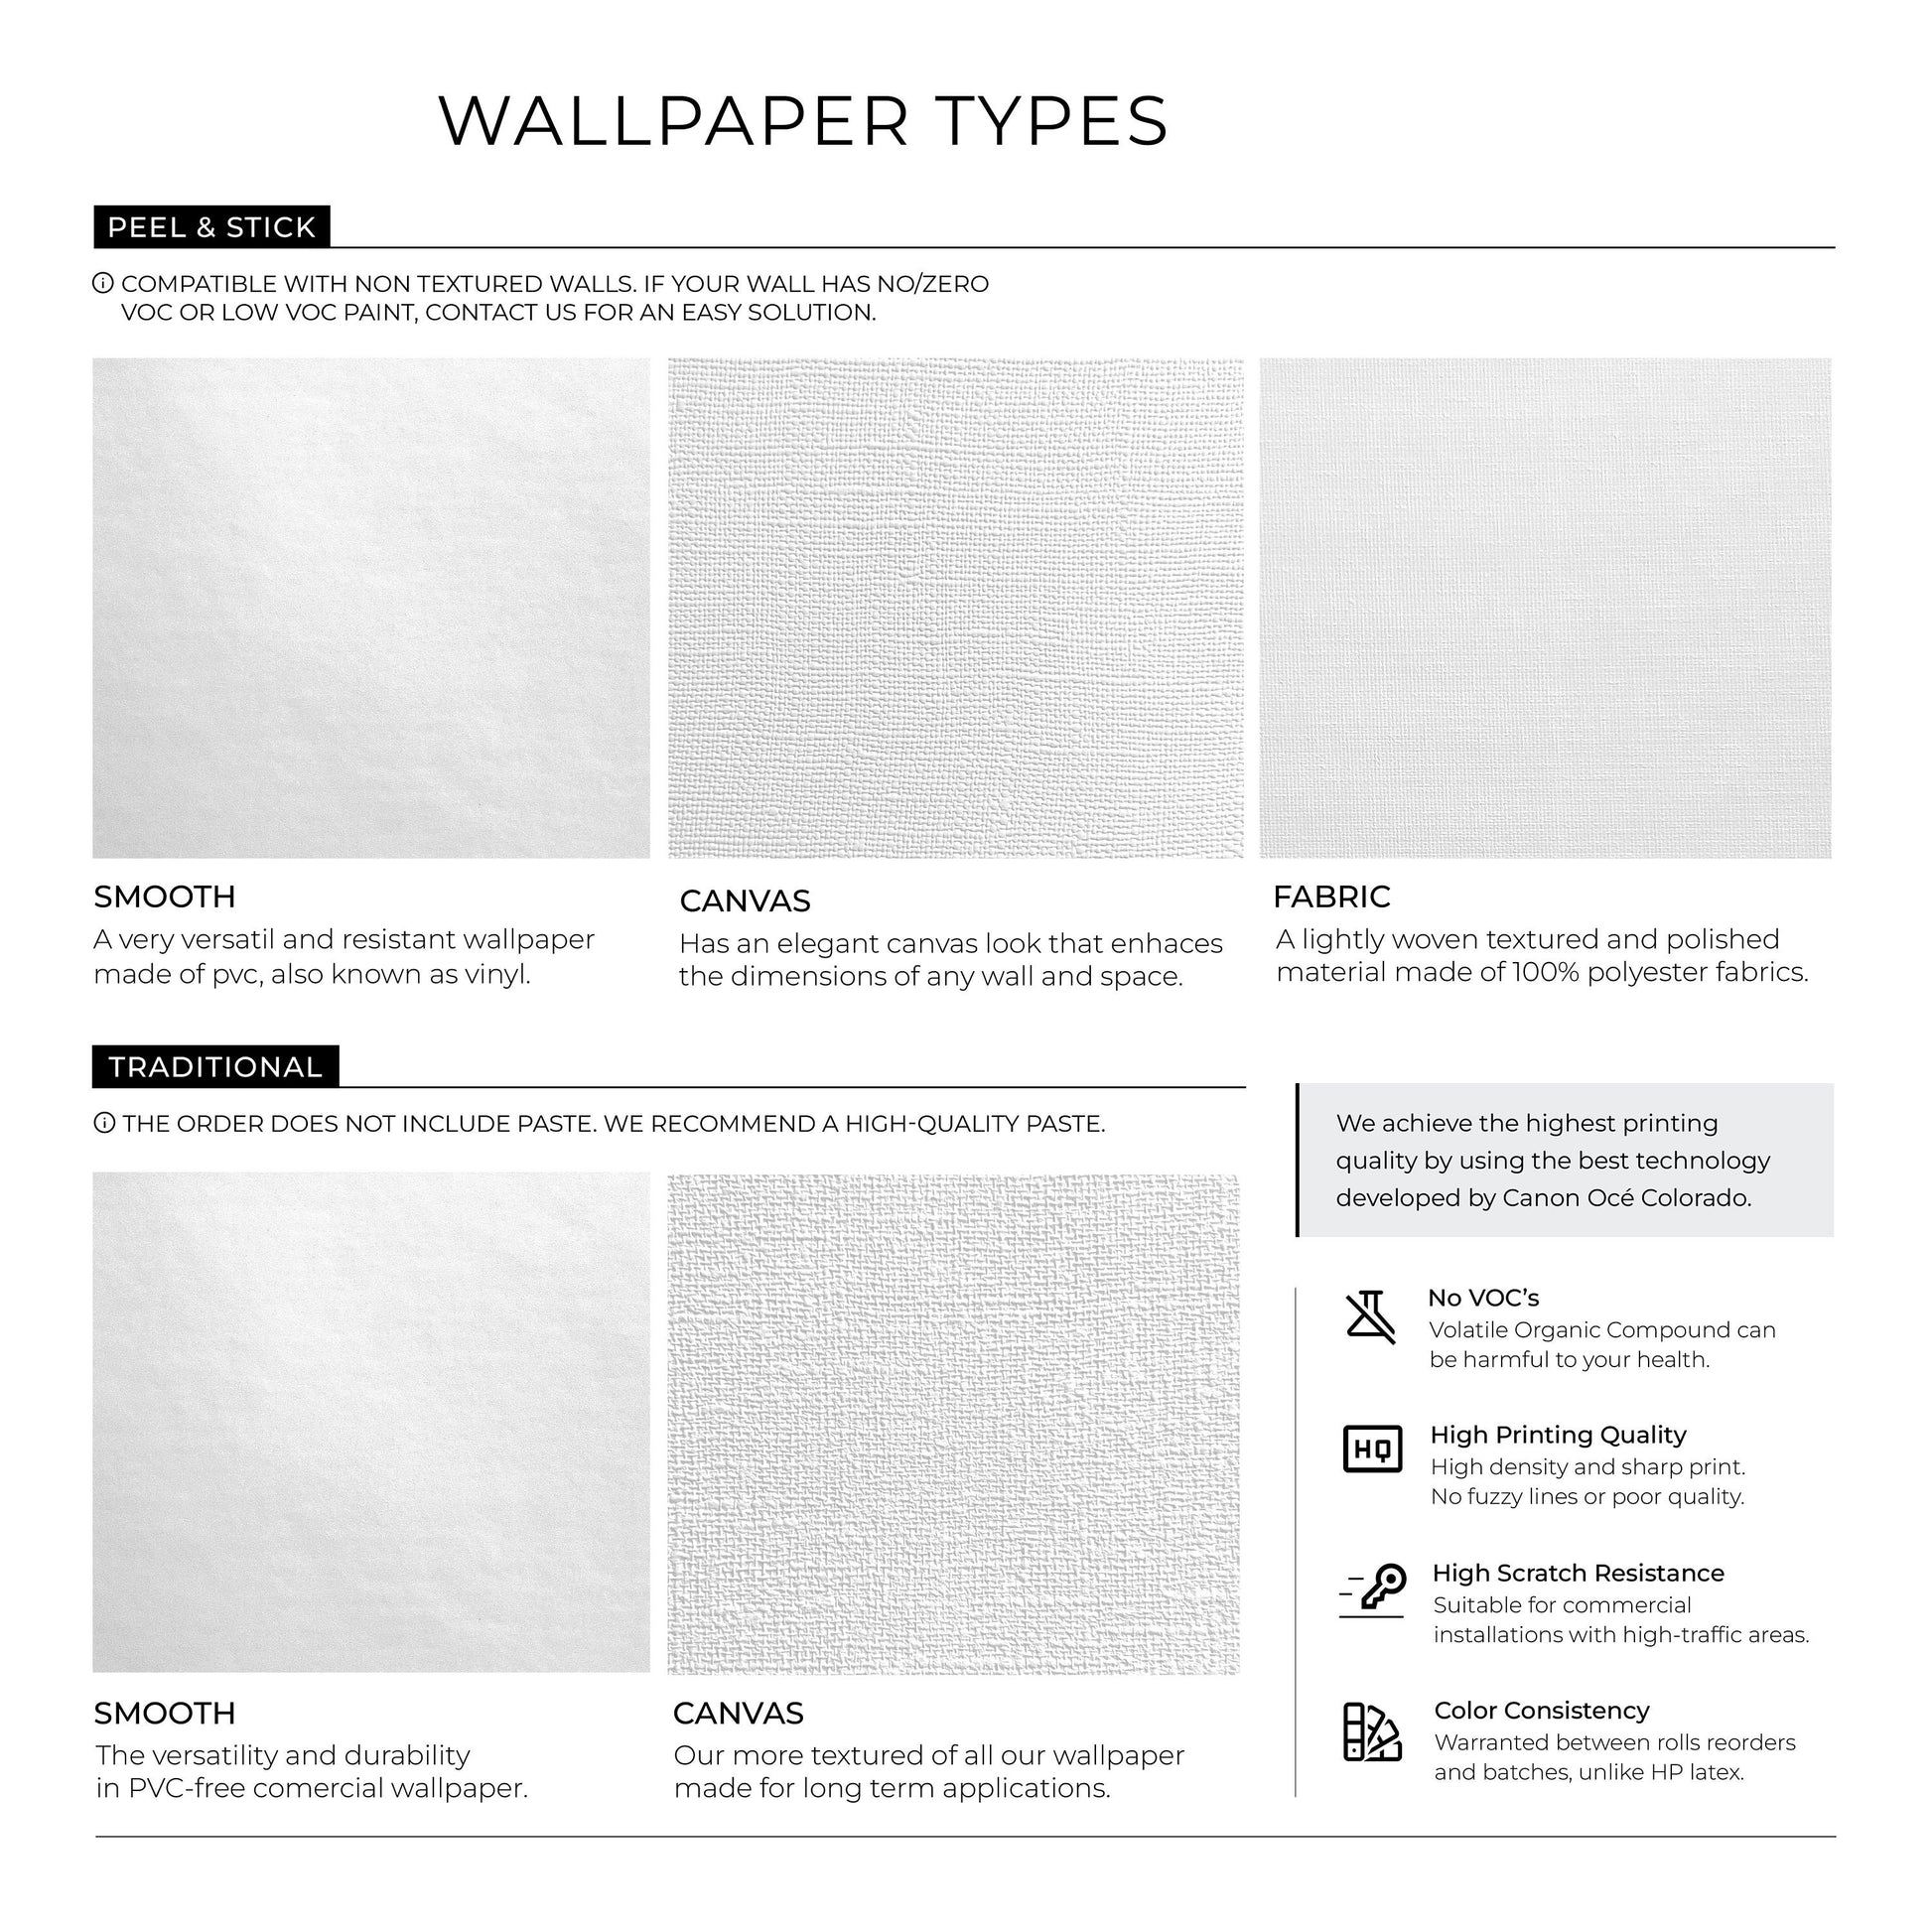 Removable Wallpaper Temporary Wallpaper Tribal Wallpaper Peel and Stick Wallpaper Wall Paper - A819